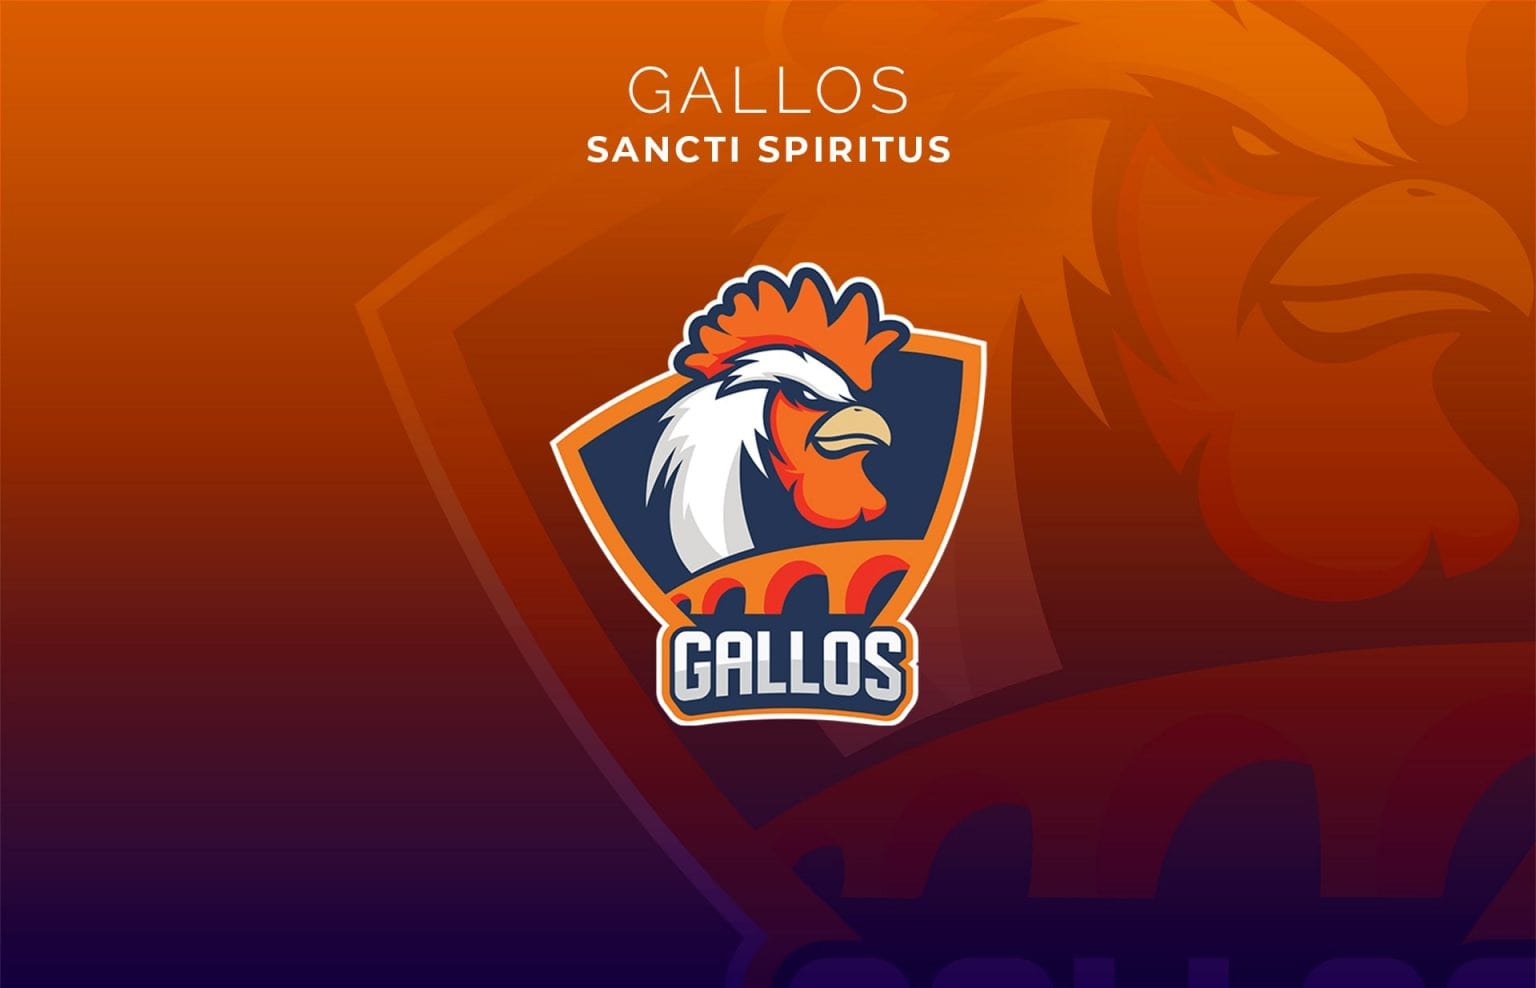 Gallos de Sancti Spíritus